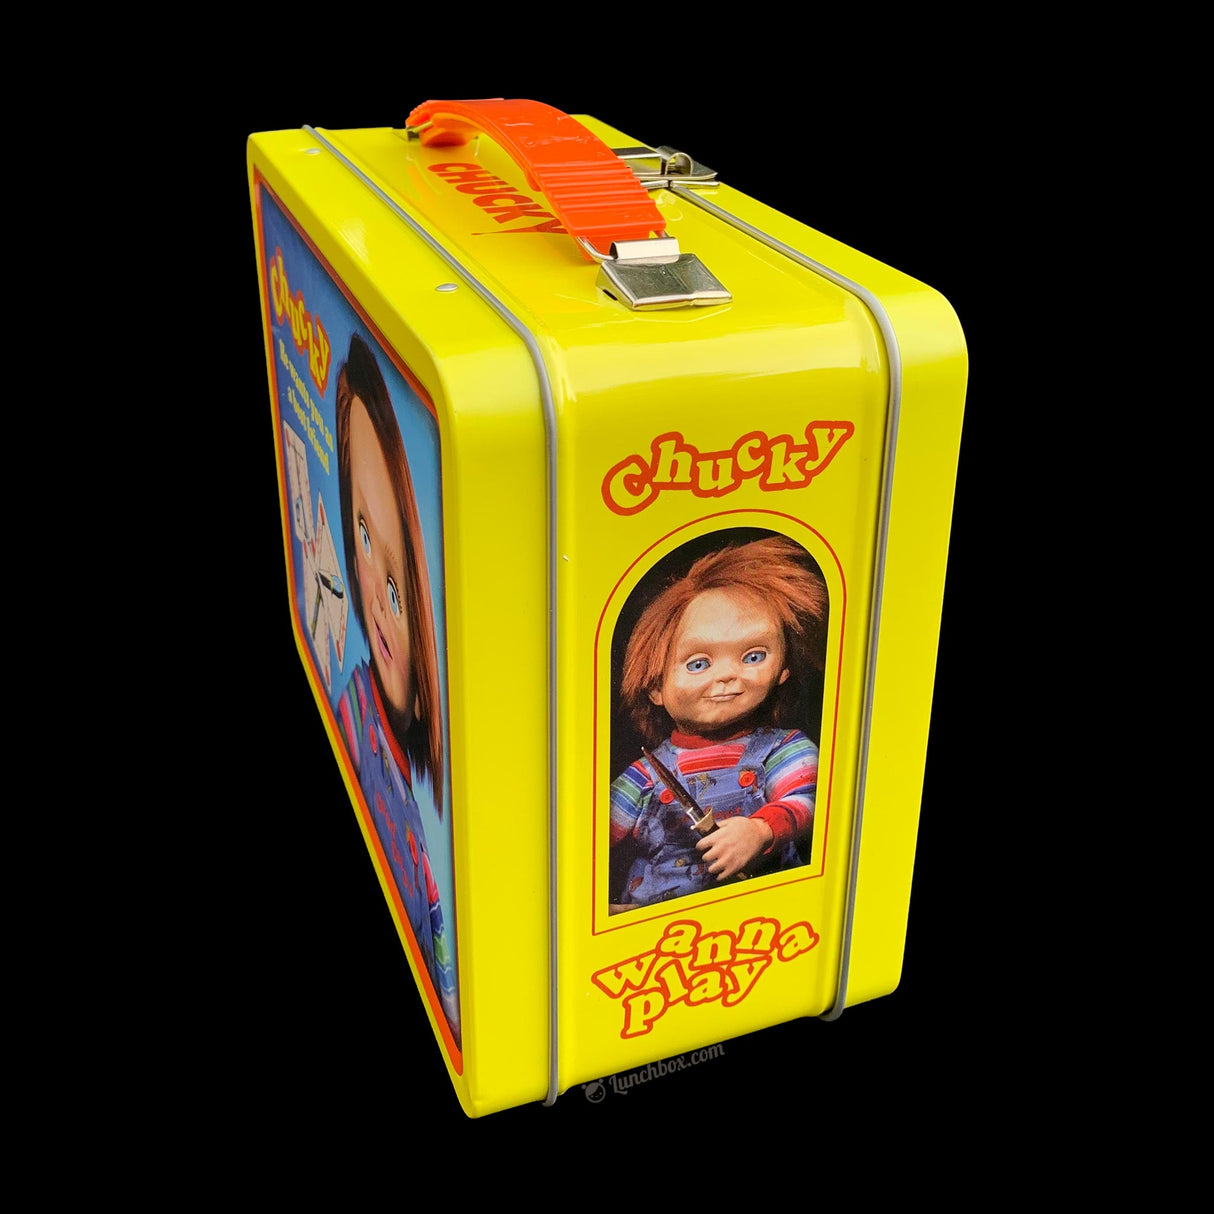 Chucky Classic Lunch Box